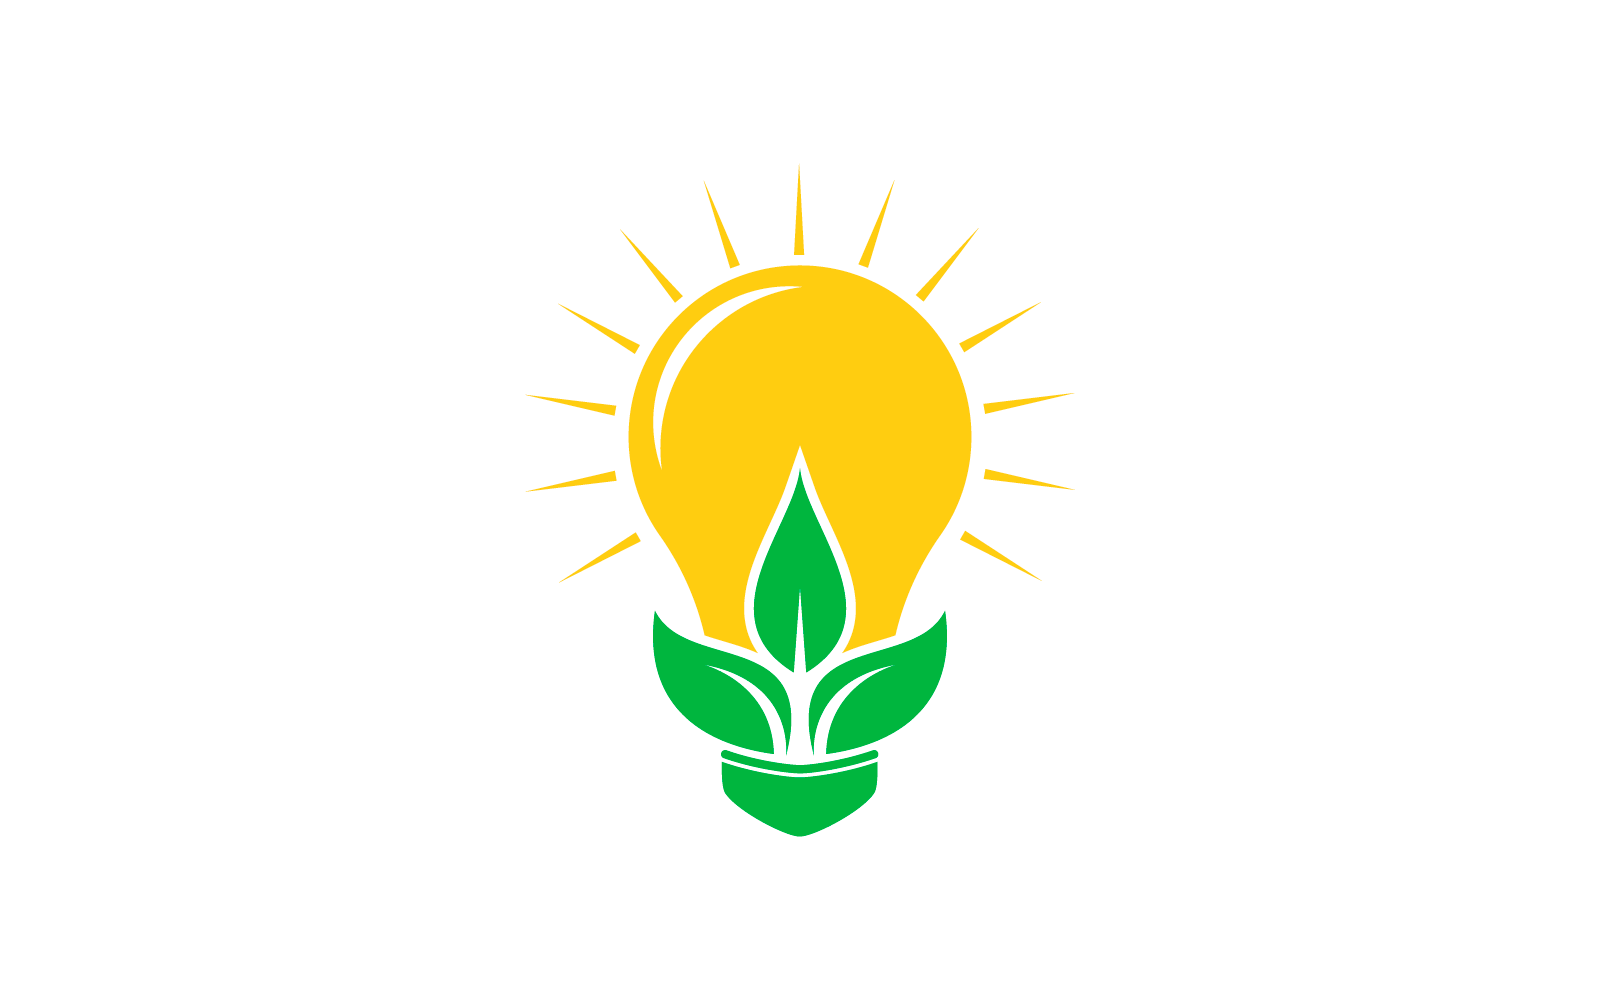 Żarówka natura logo wektor Płaska konstrukcja